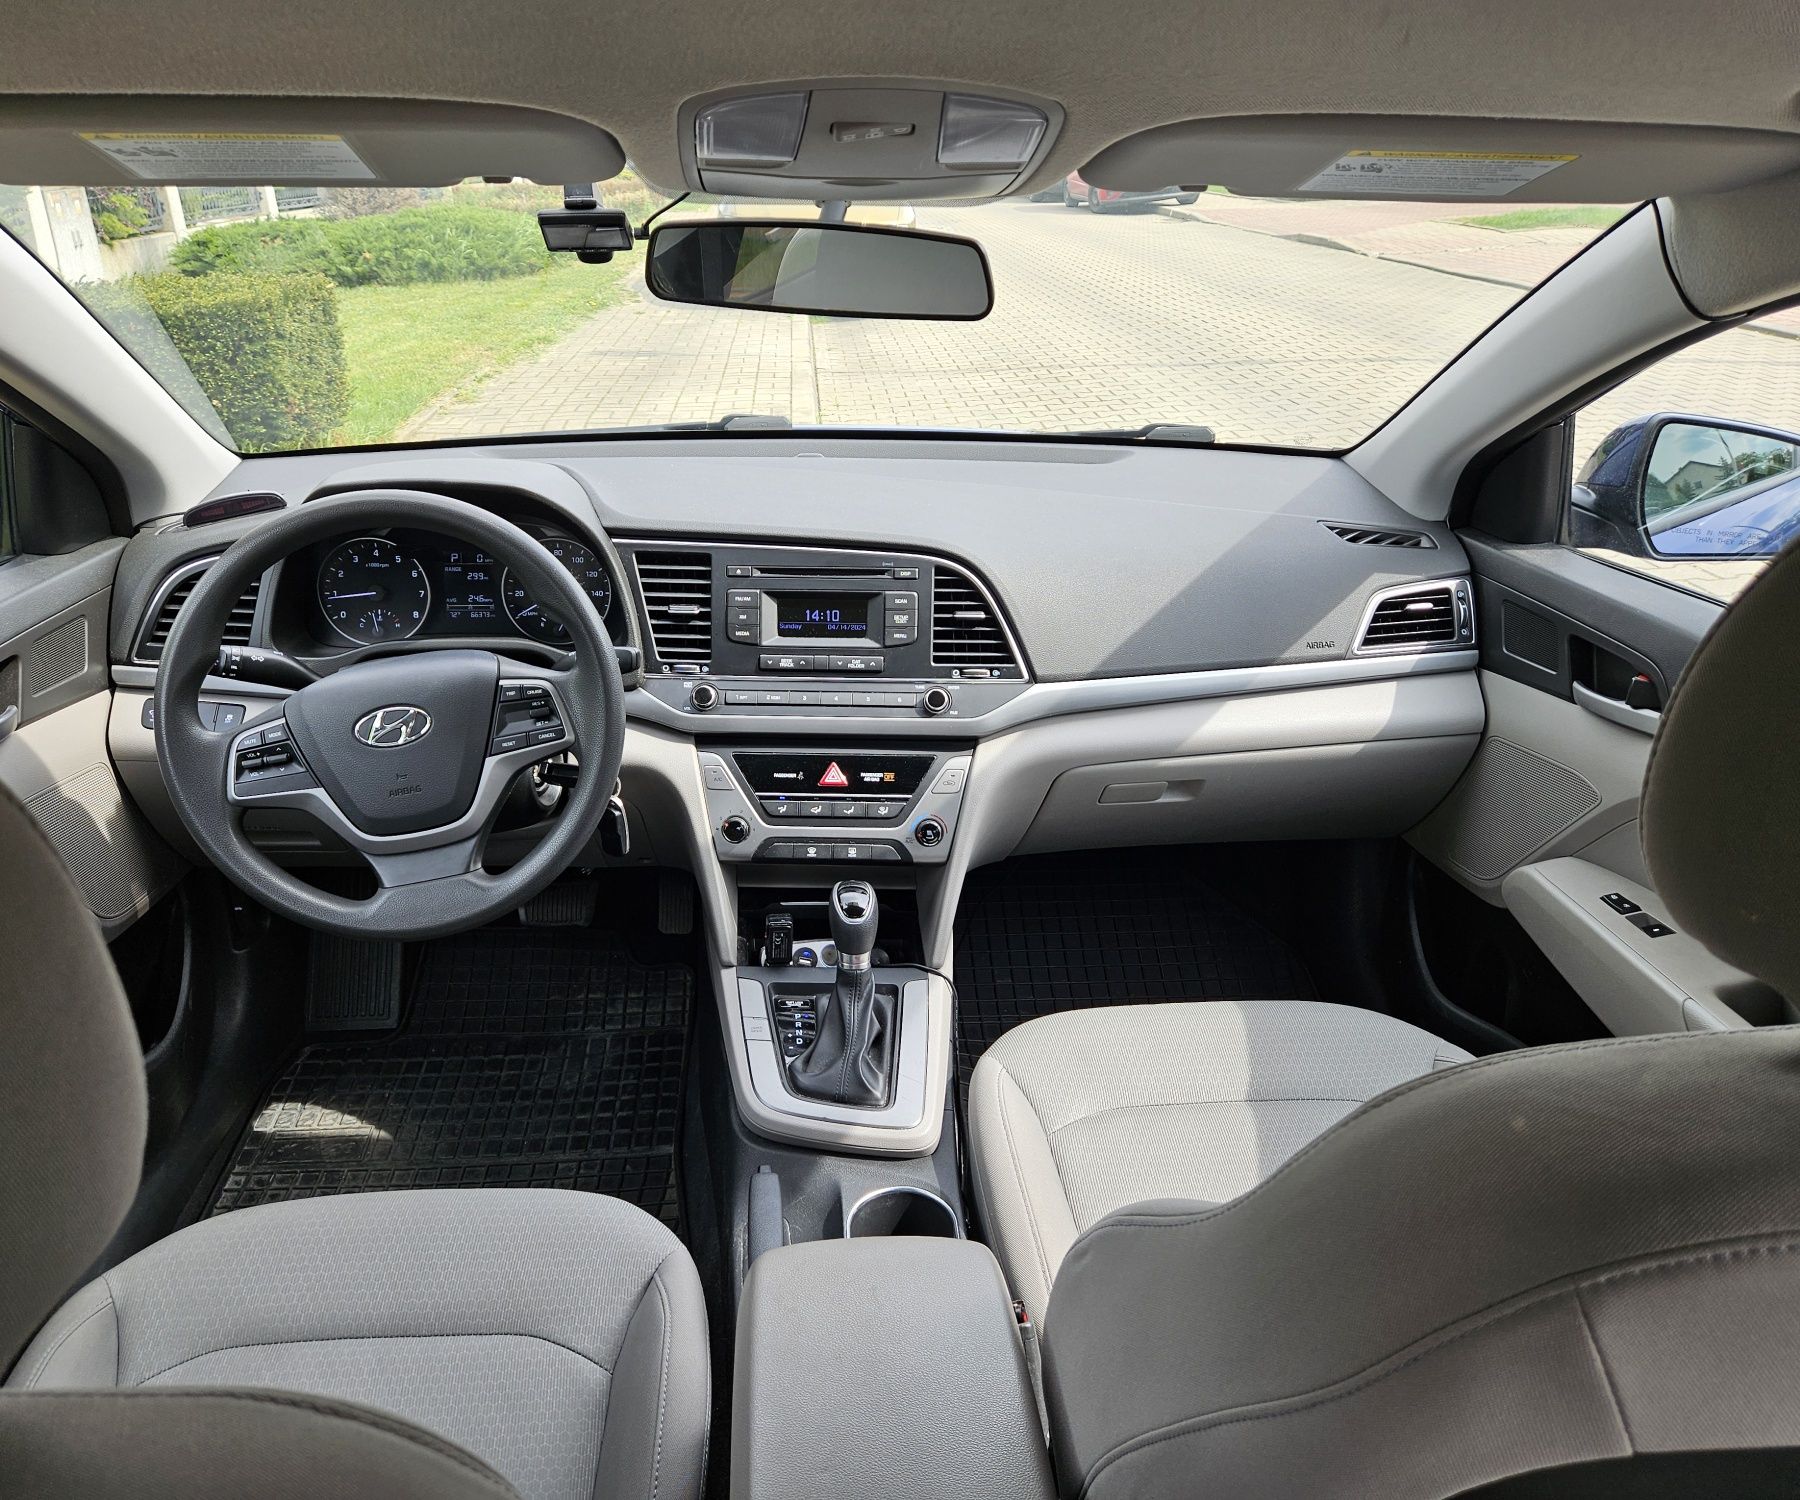 Hyundai Elantra SE, 2017, 2.0 benzyna, automat, tempomat, bezwypadkowy